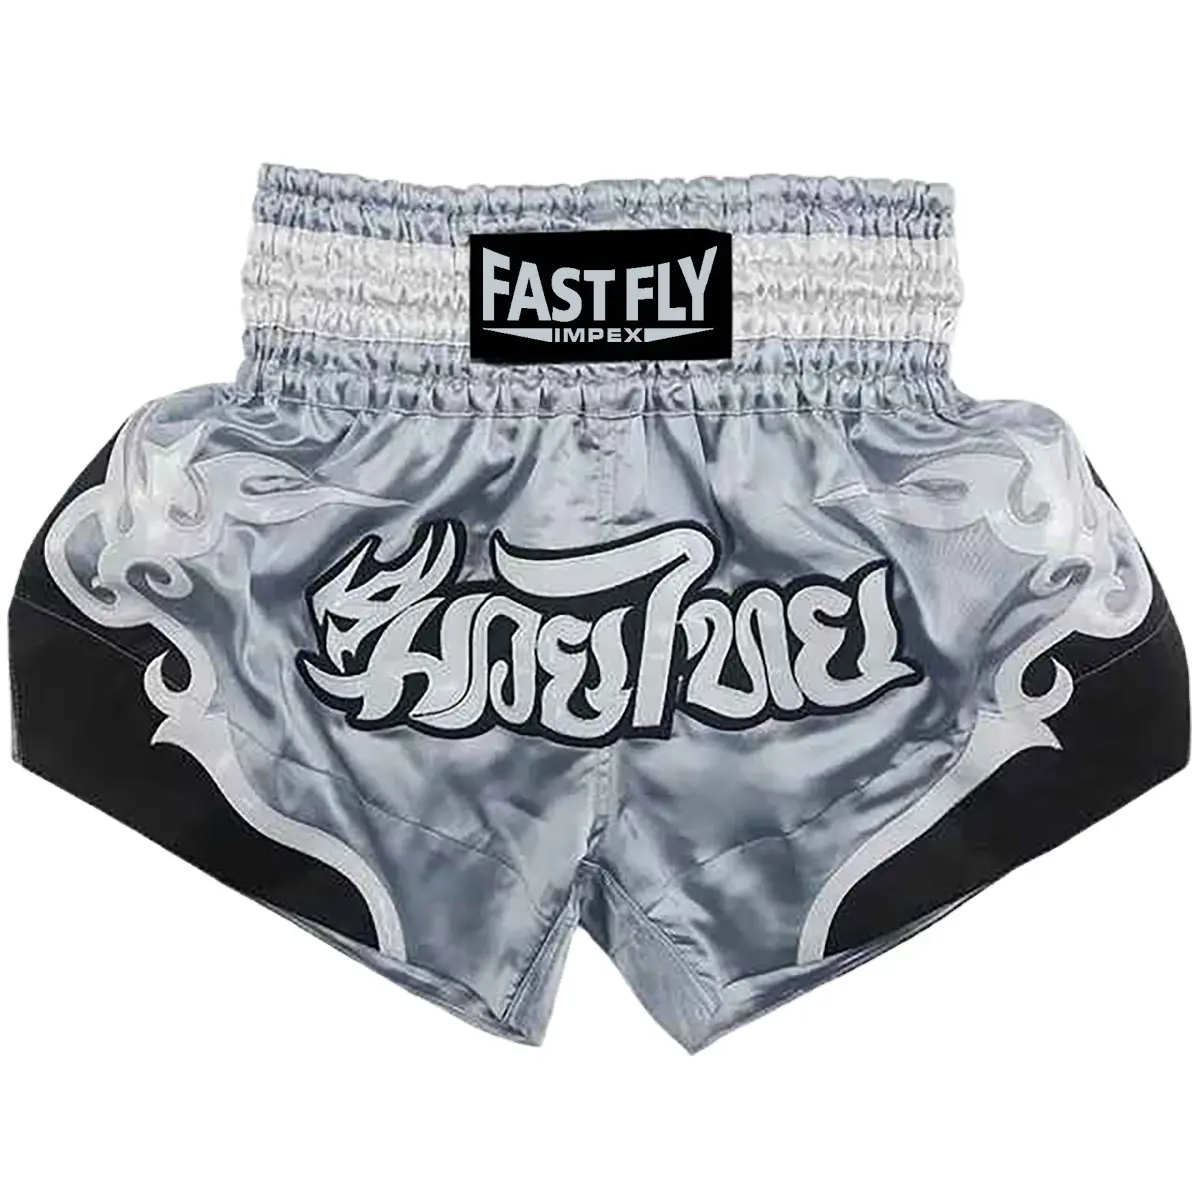 Shorts de mma personalizados, shorts de mma preço barato feito sob encomenda de alta qualidade, muay thai, boxe para homens